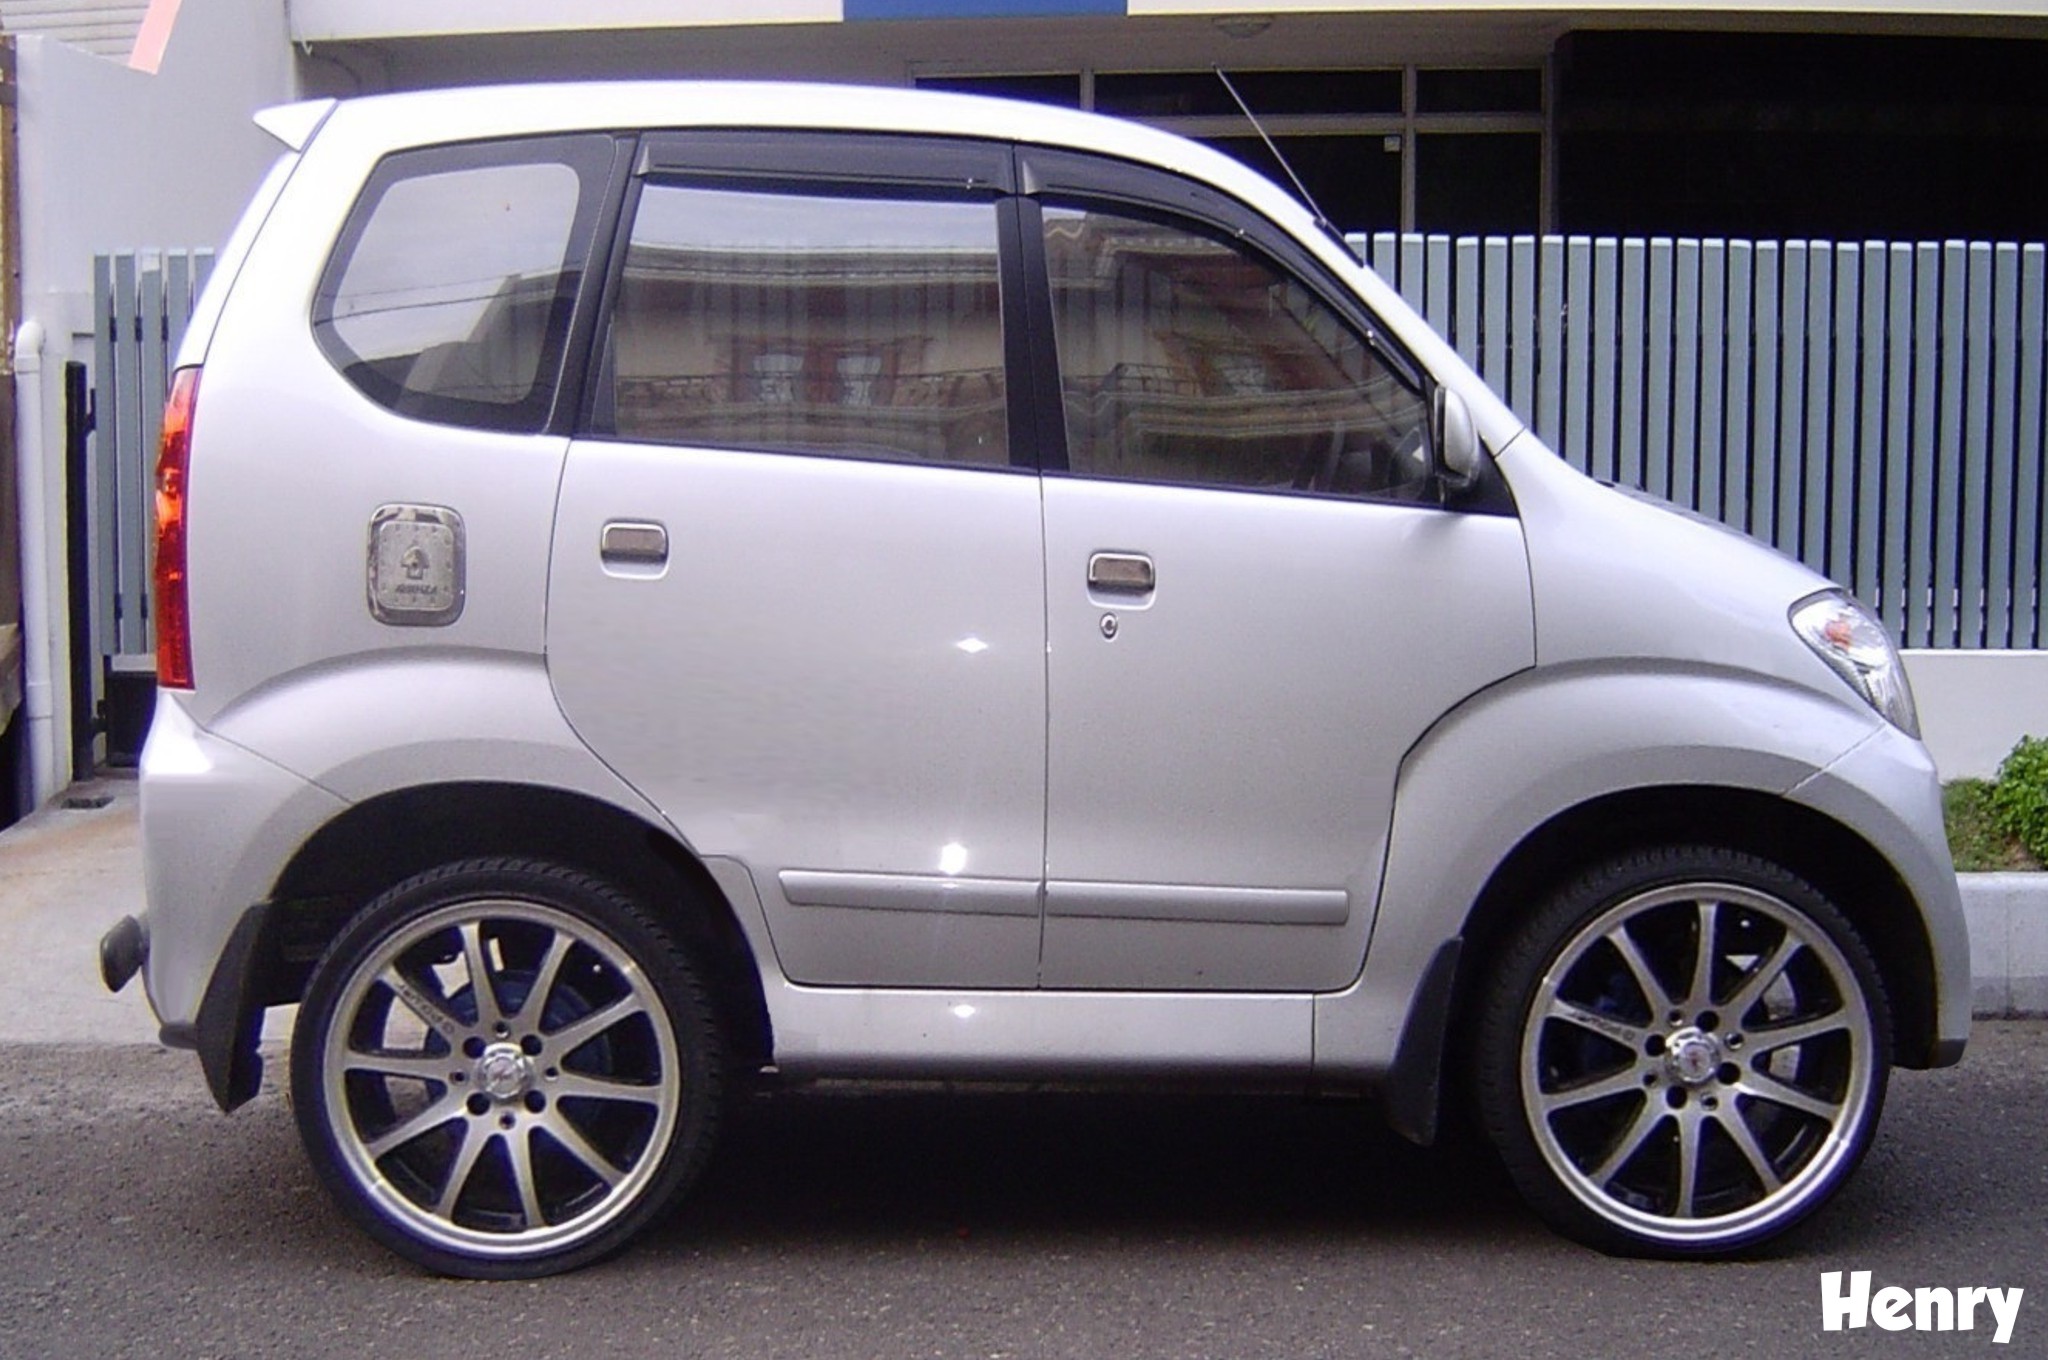 Toyota avanza 2009 price malaysia